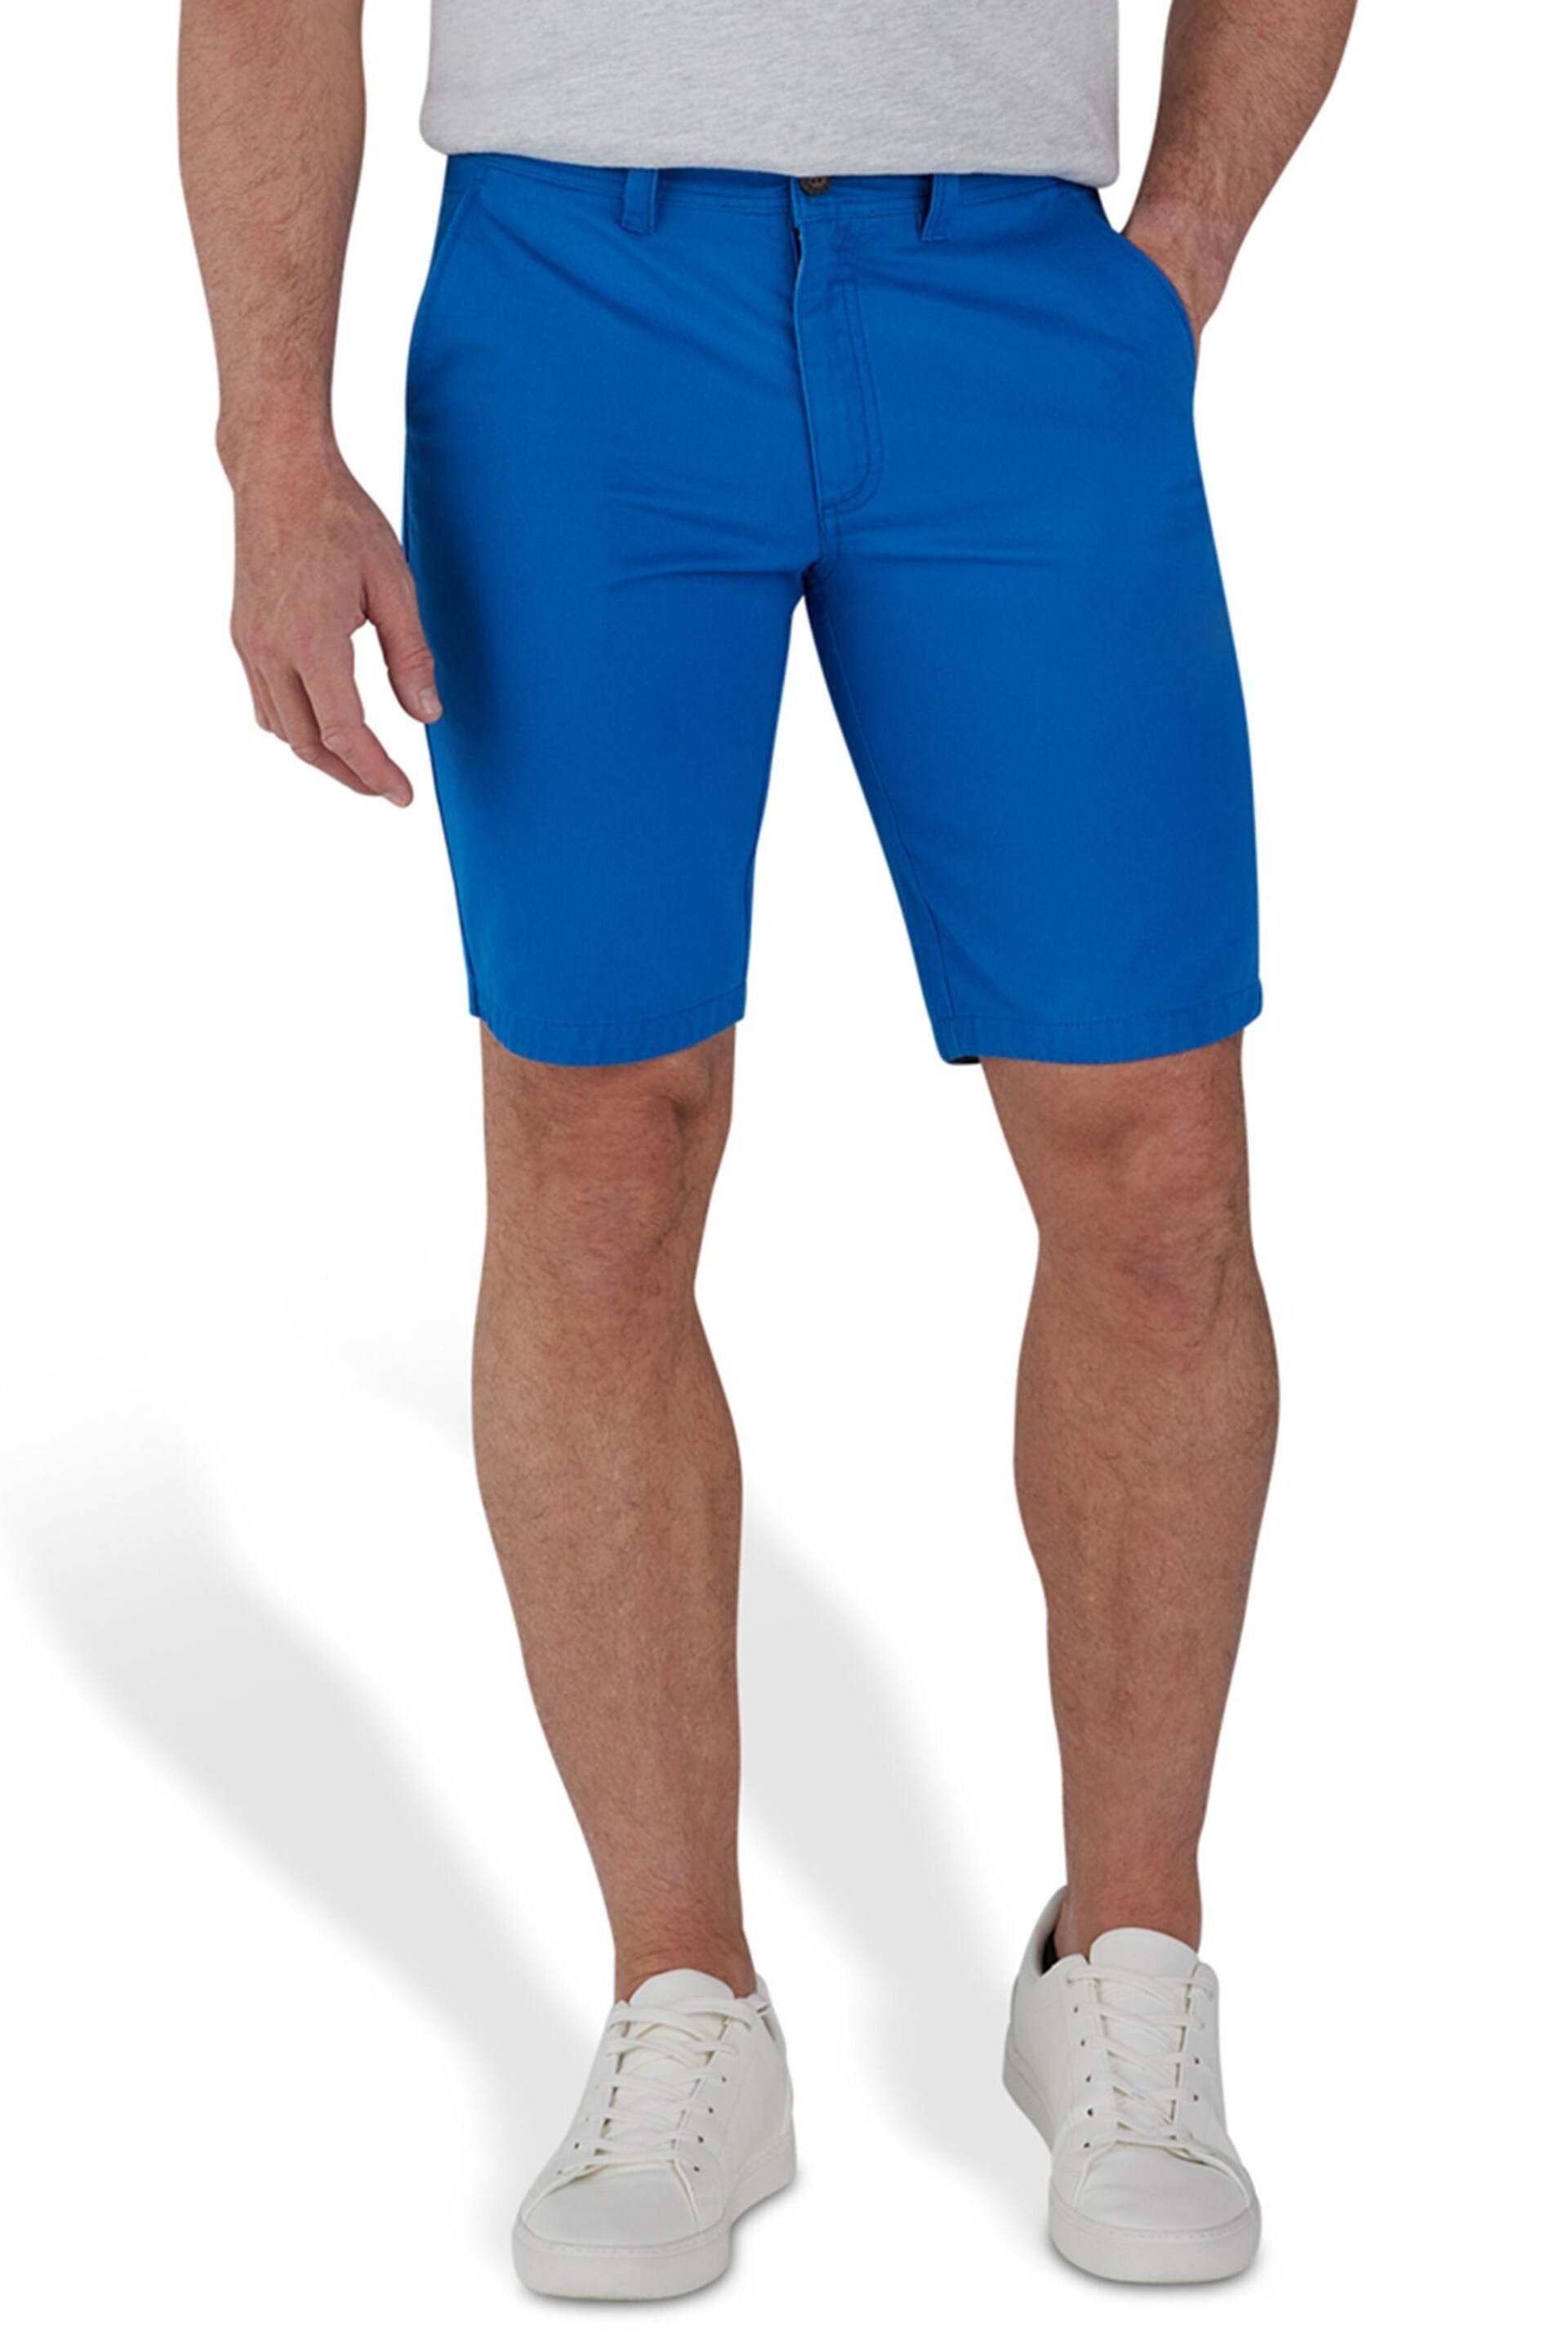 Raging Bull Blue Chino Shorts - Image 1 of 6